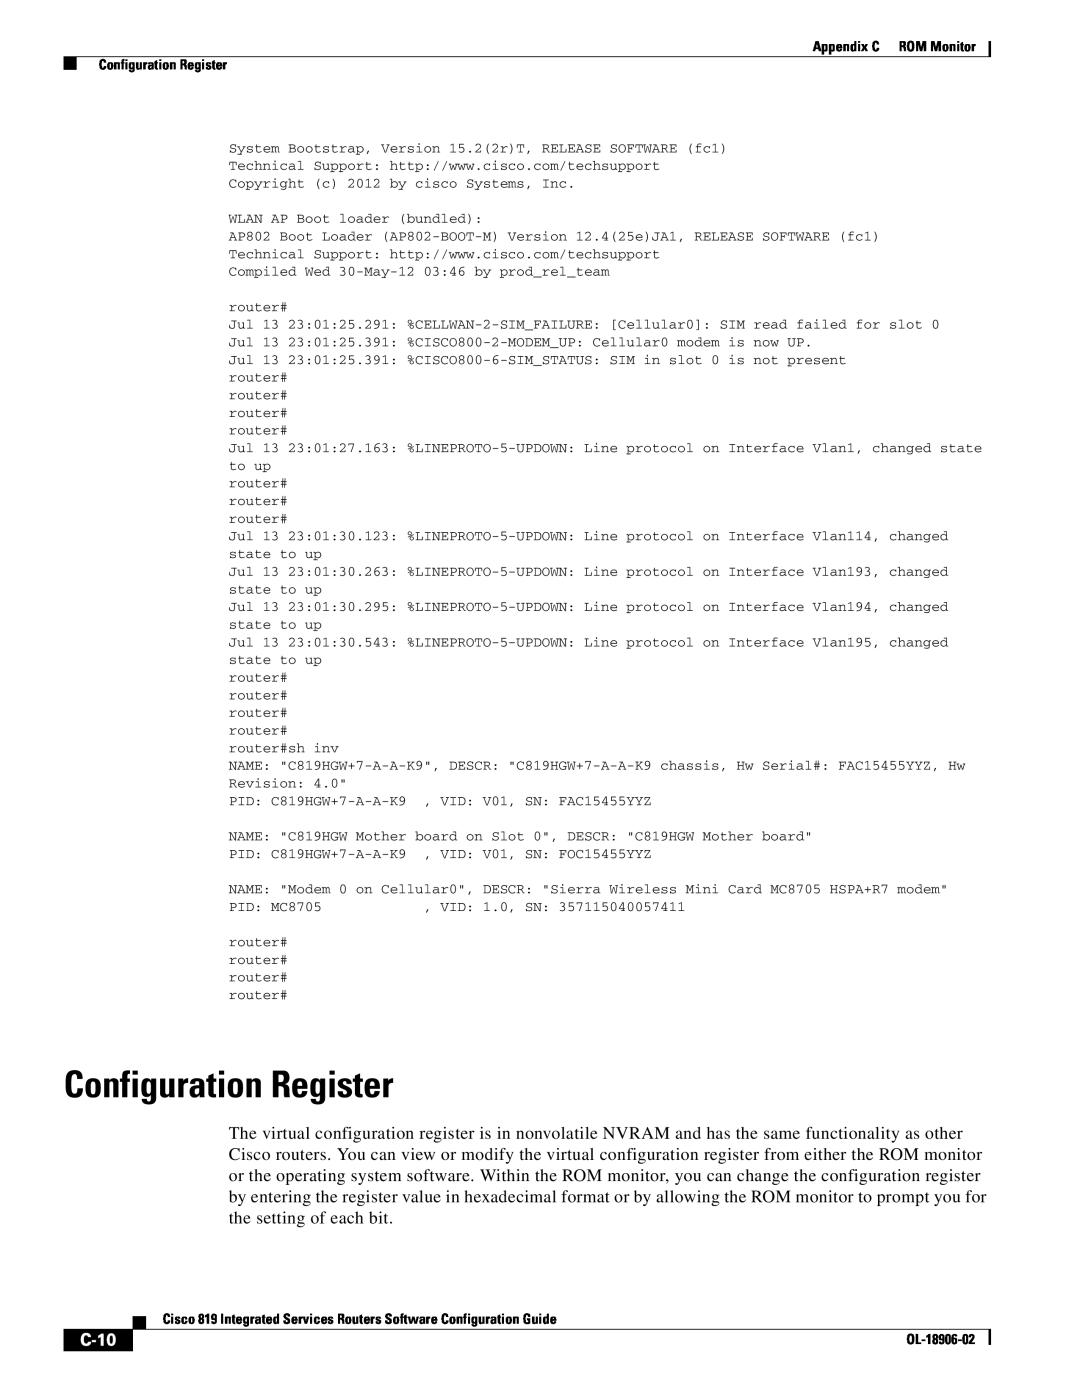 Cisco Systems C819GUK9, C819HG4GVK9 manual C-10, Appendix C ROM Monitor Configuration Register 